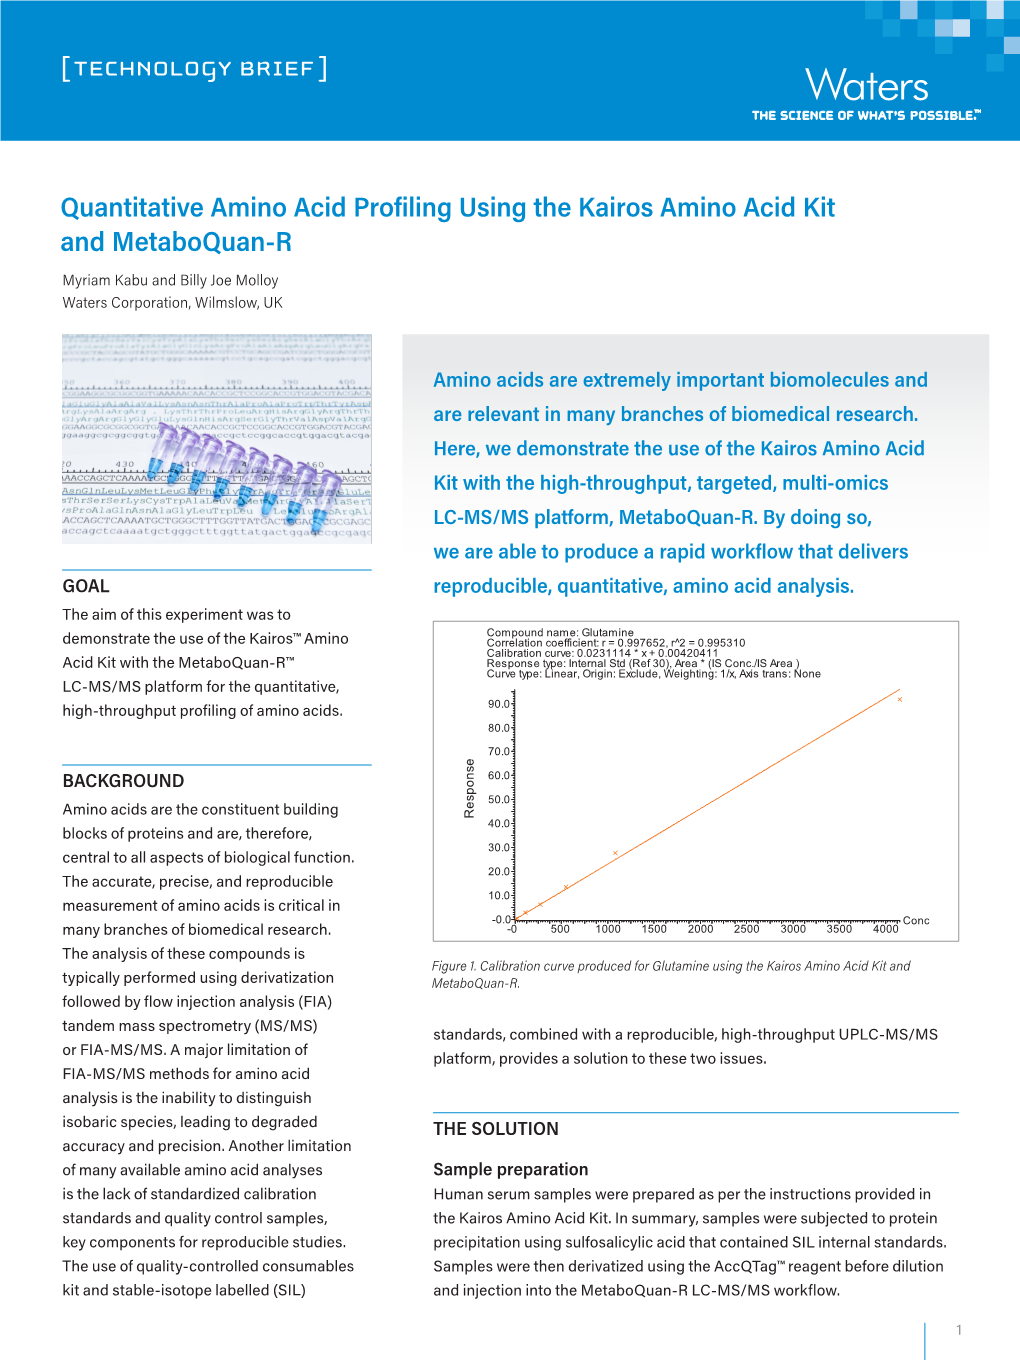 Quantitative Amino Acid Profiling Using the Kairos Amino Acid Kit and Metaboquan-R